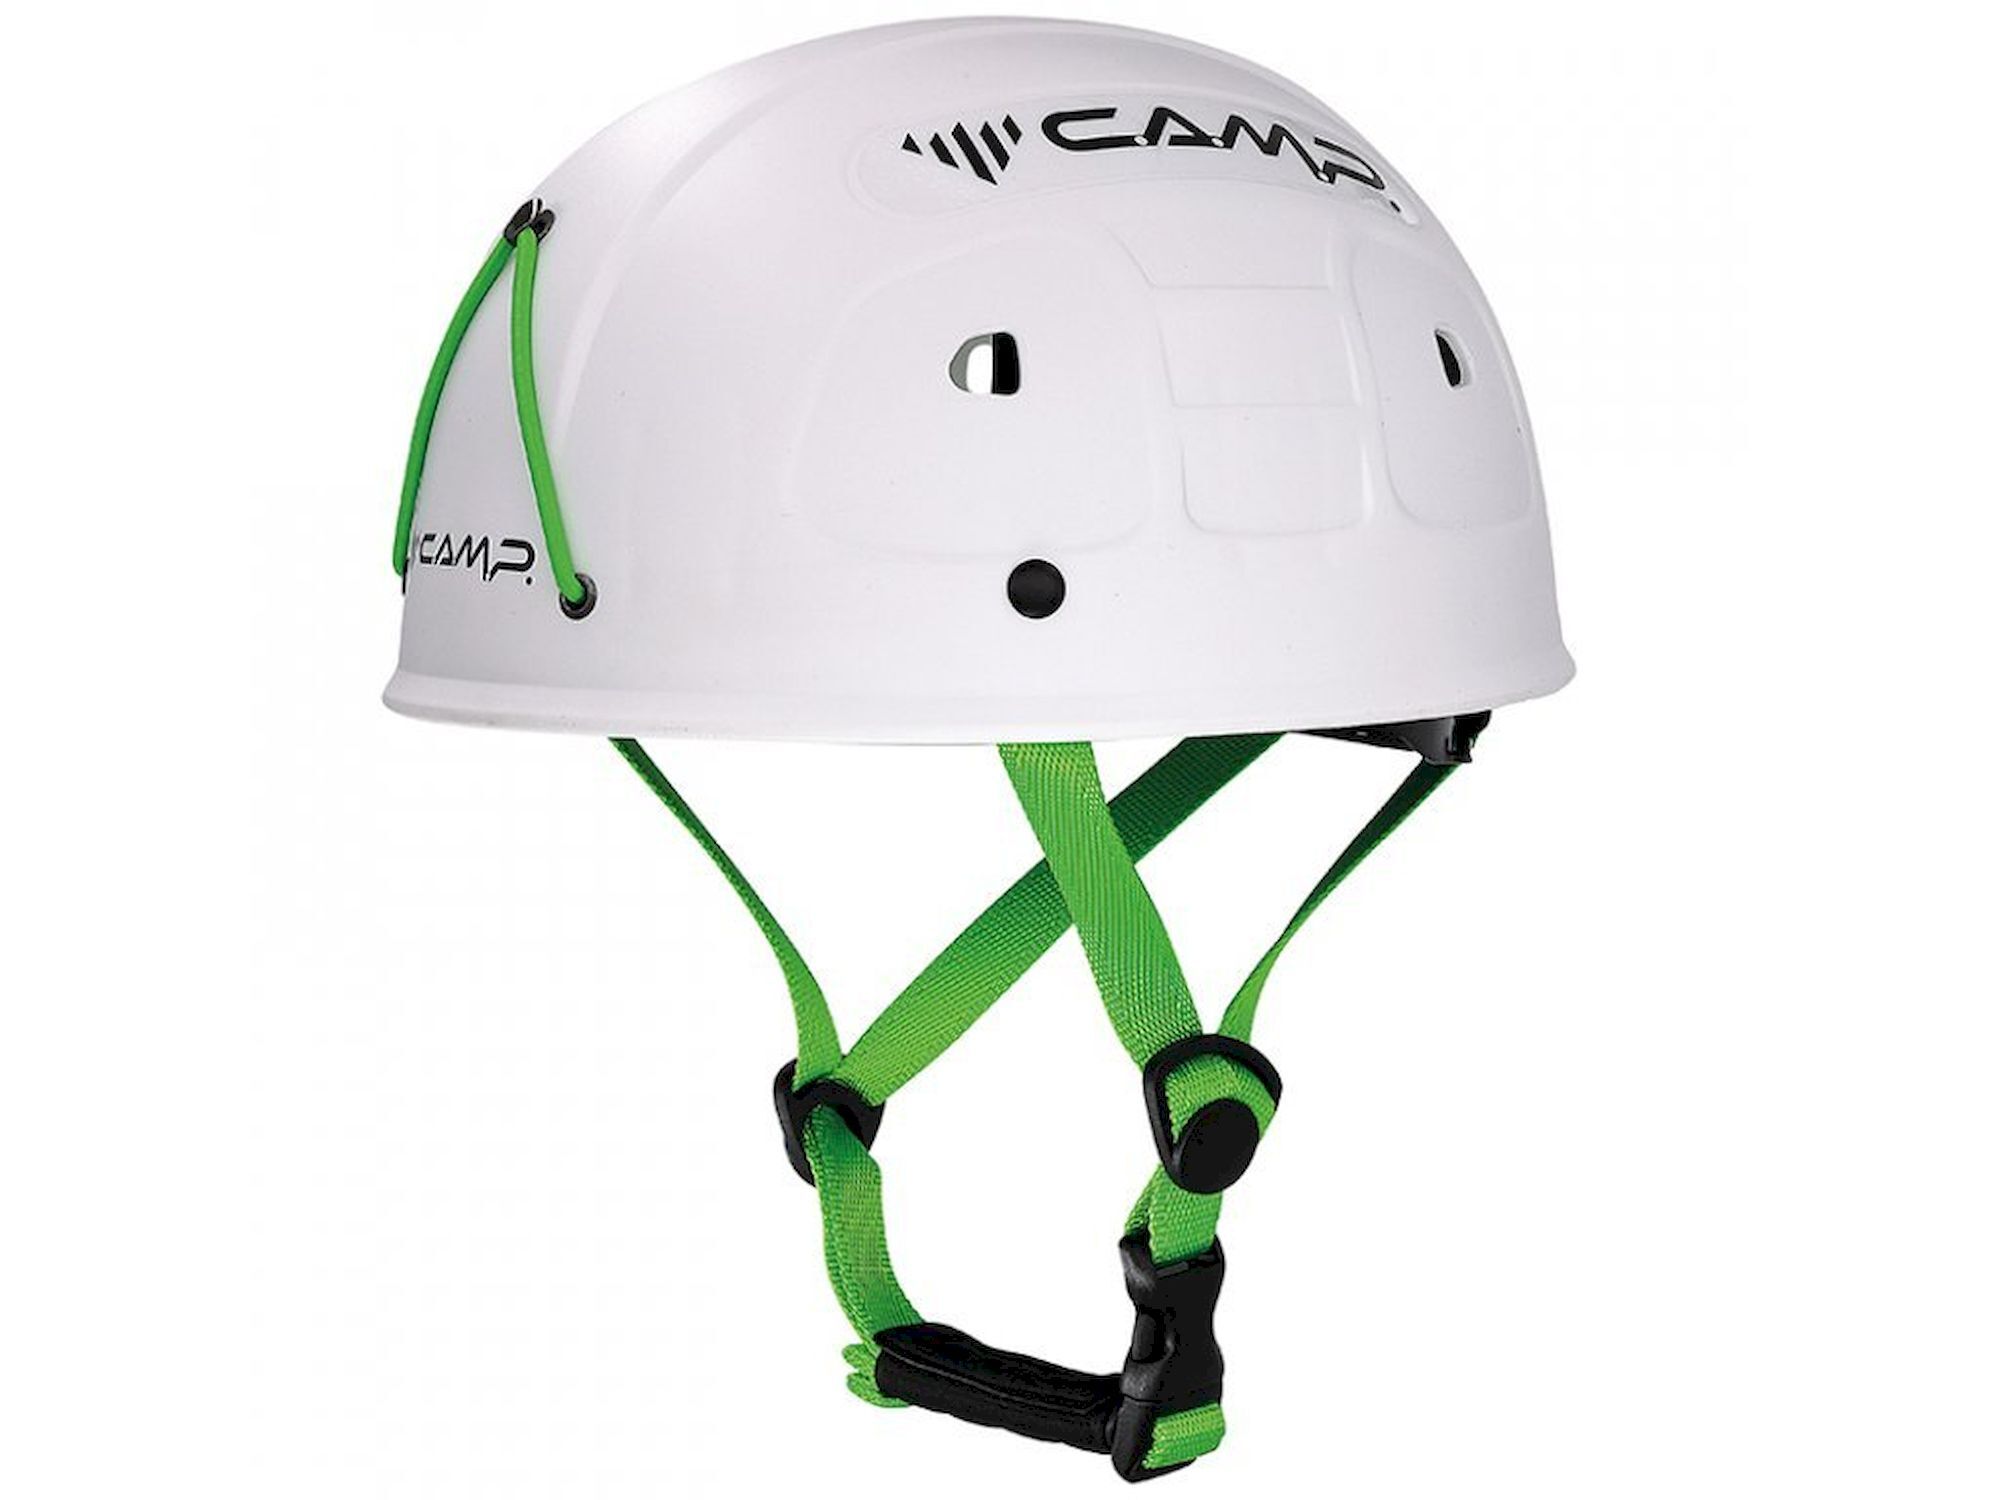 Camp Rockstar - Climbing helmet